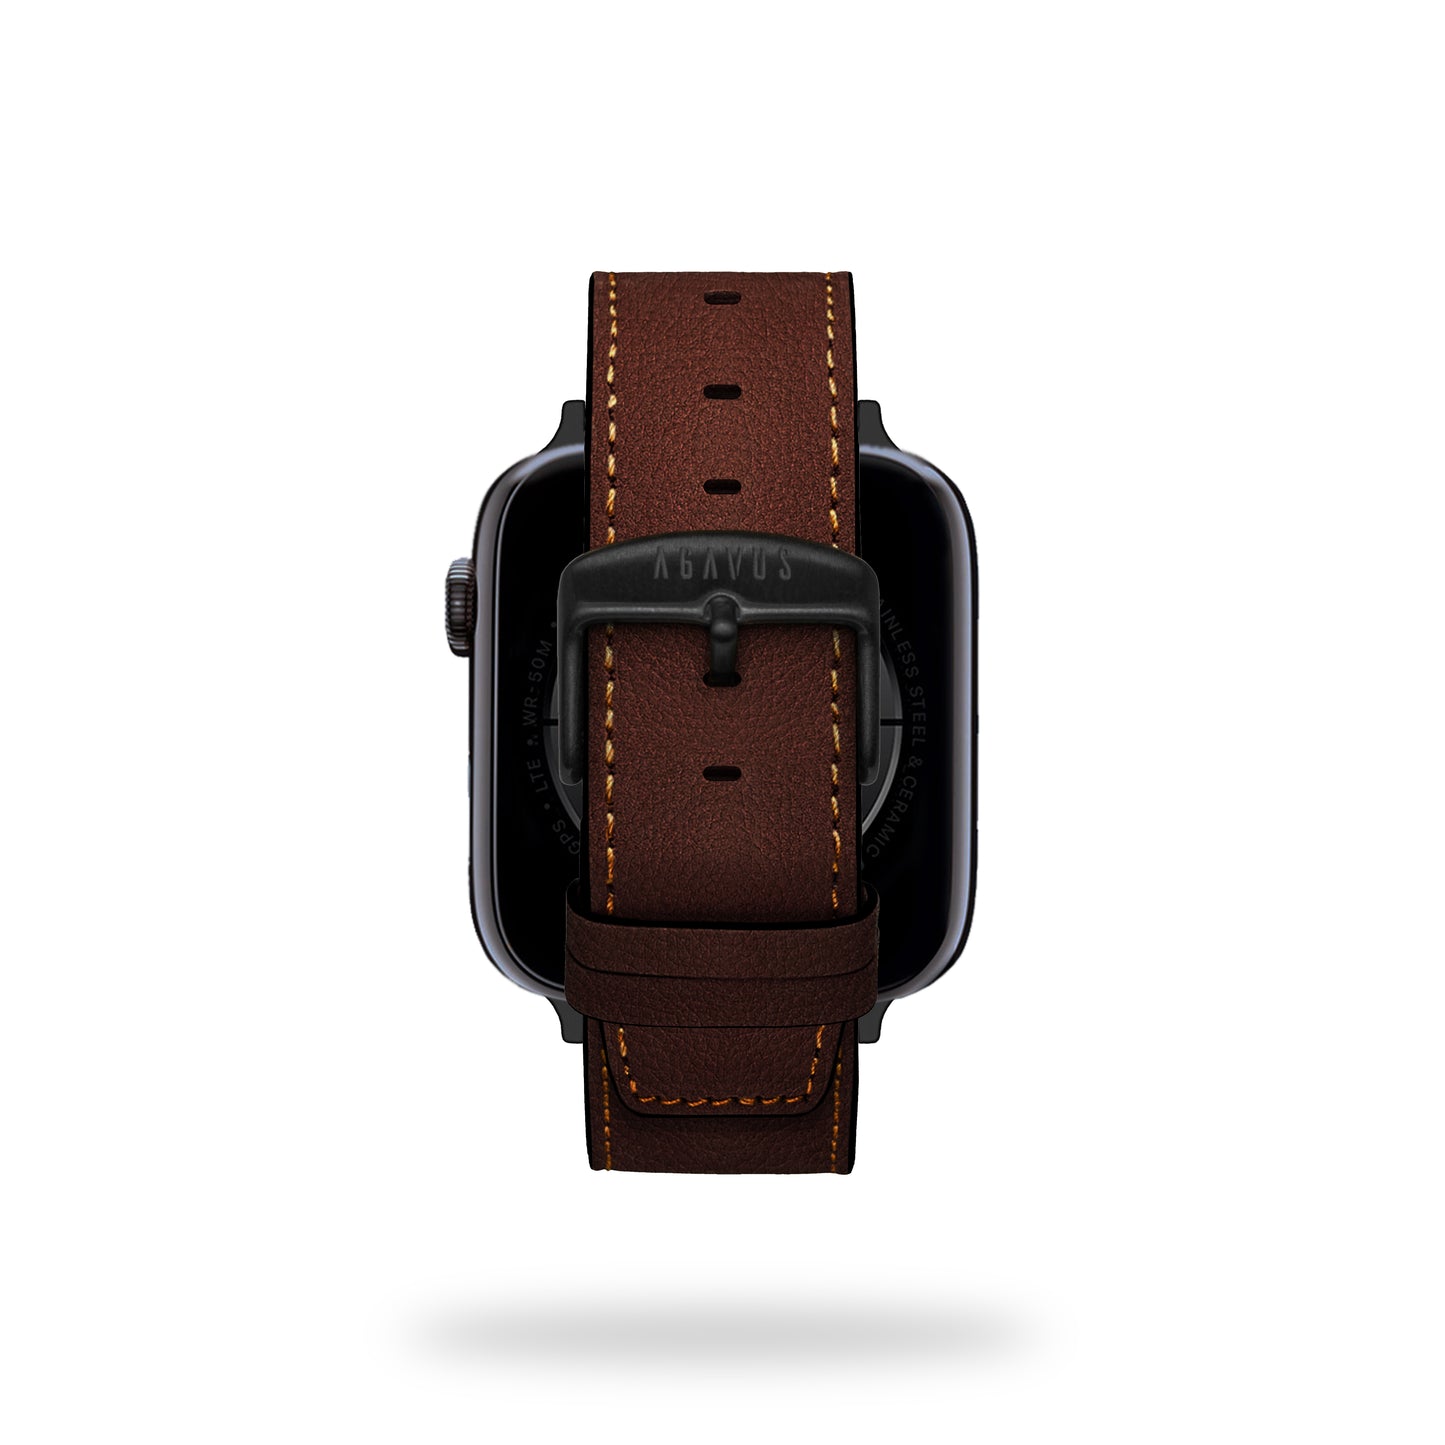 Apple Watch Band - Ebony